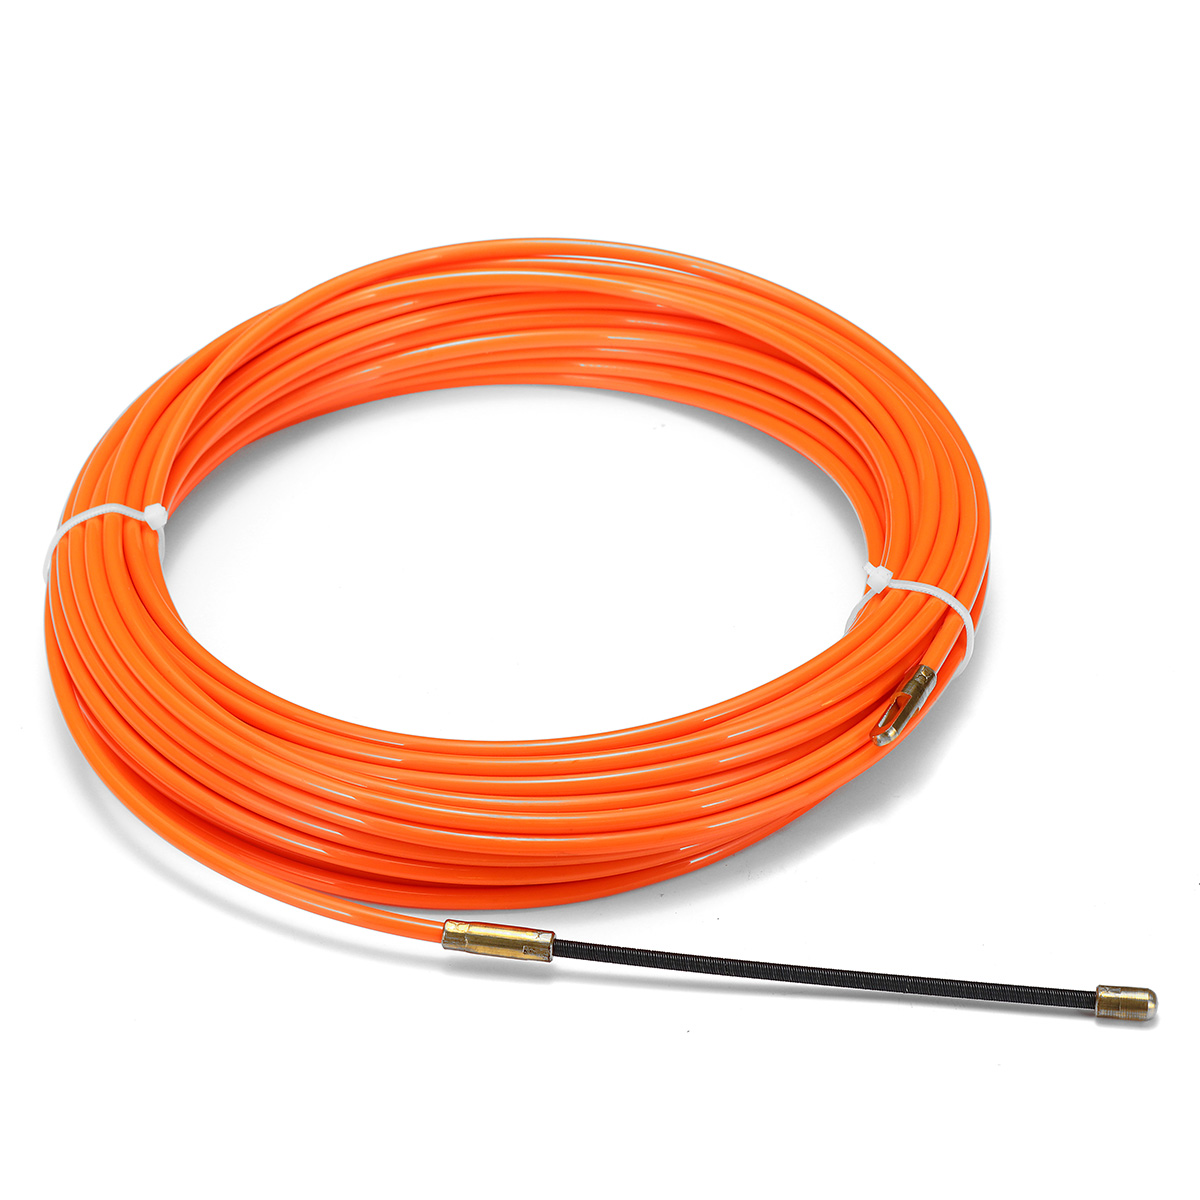 Cable-Push-Puller-Reel-Conduit-Nylon-Snake-Fish-Tape-Wire-Orange-4mm-15m-1379495-3